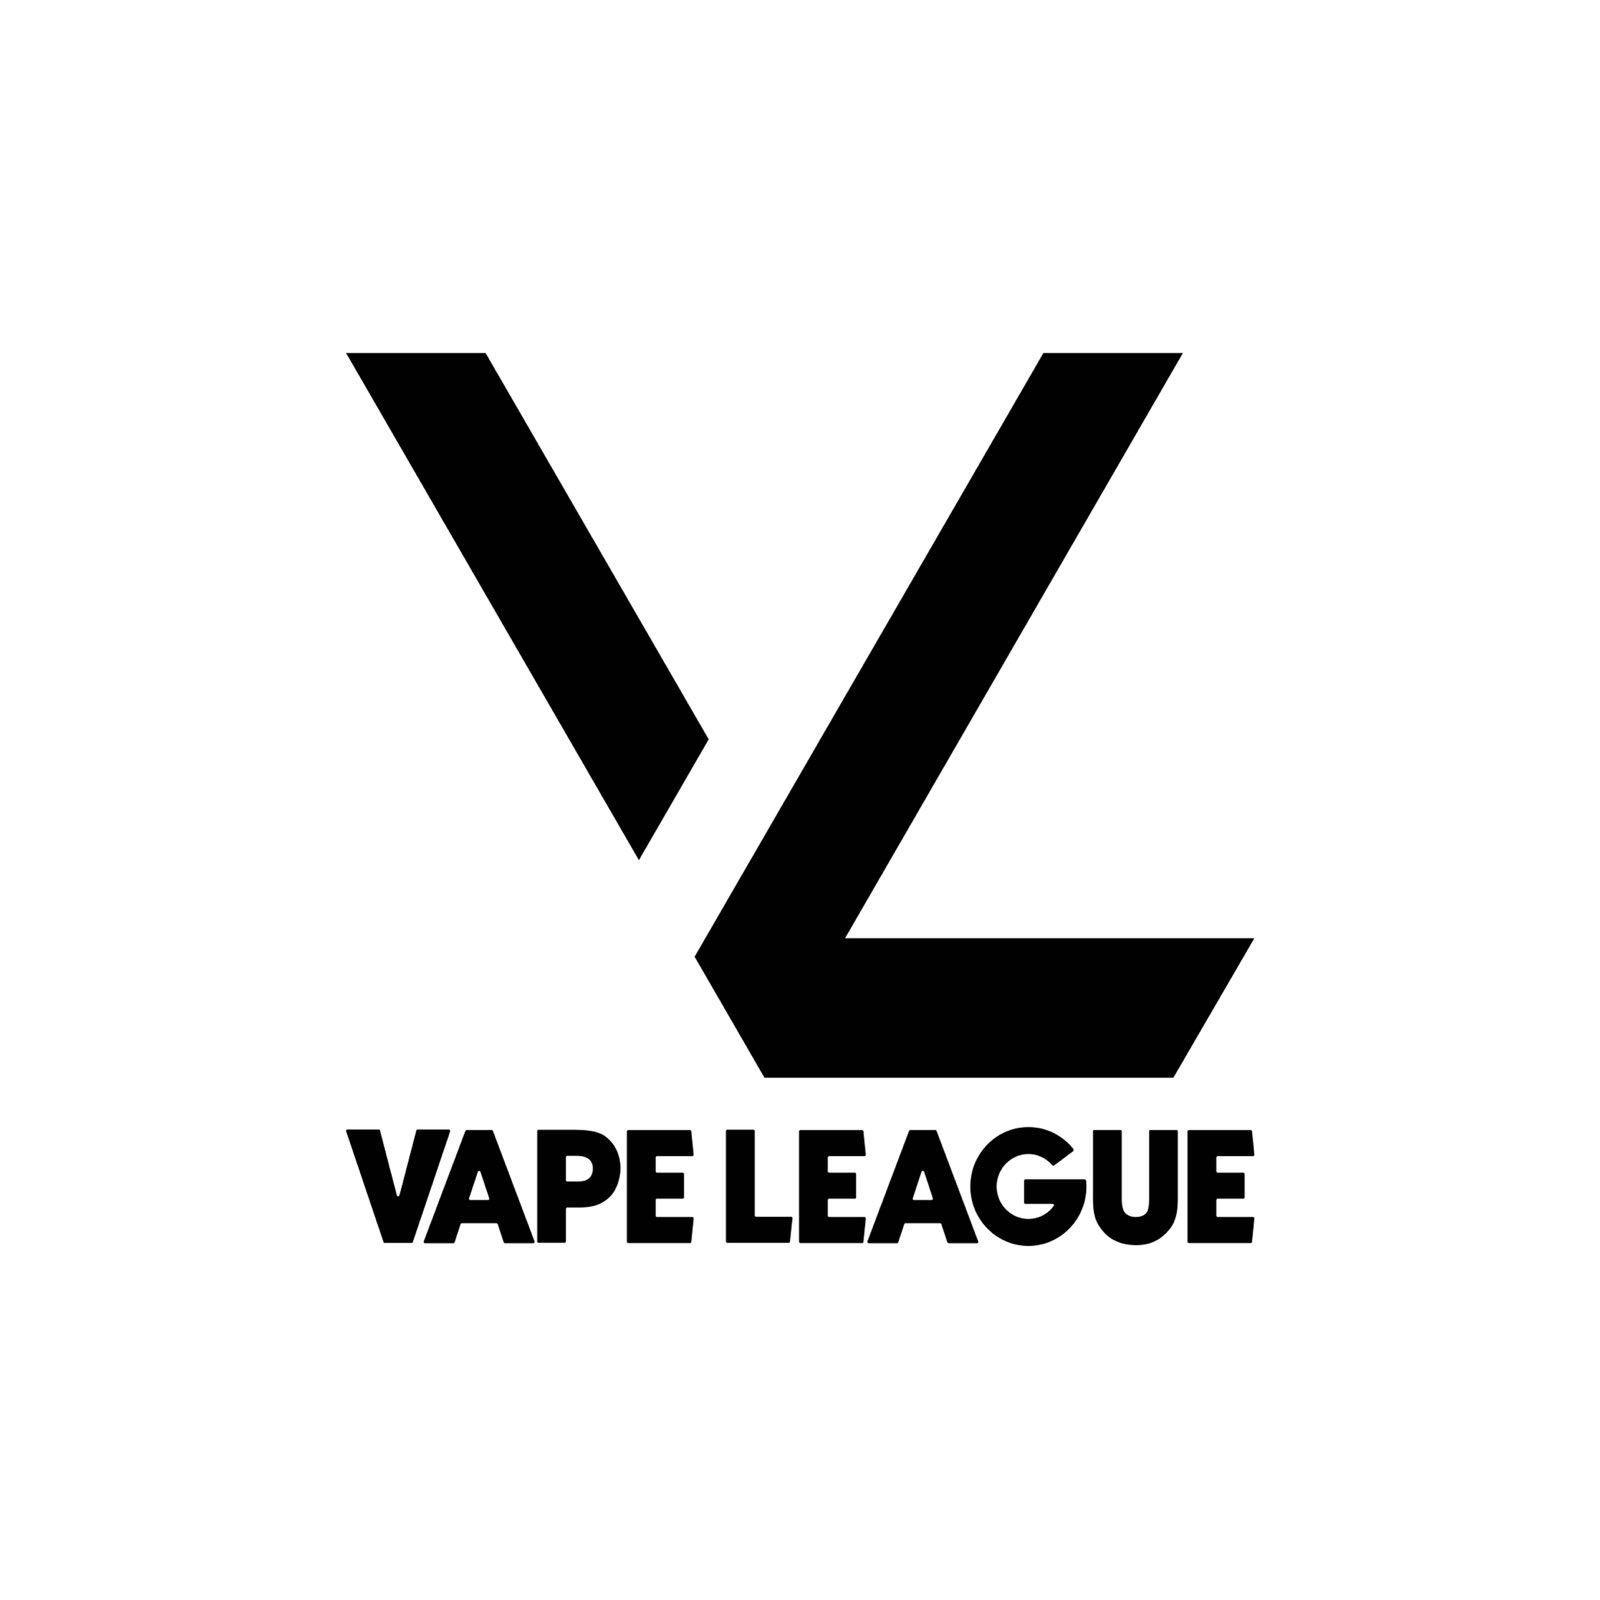 Vape League